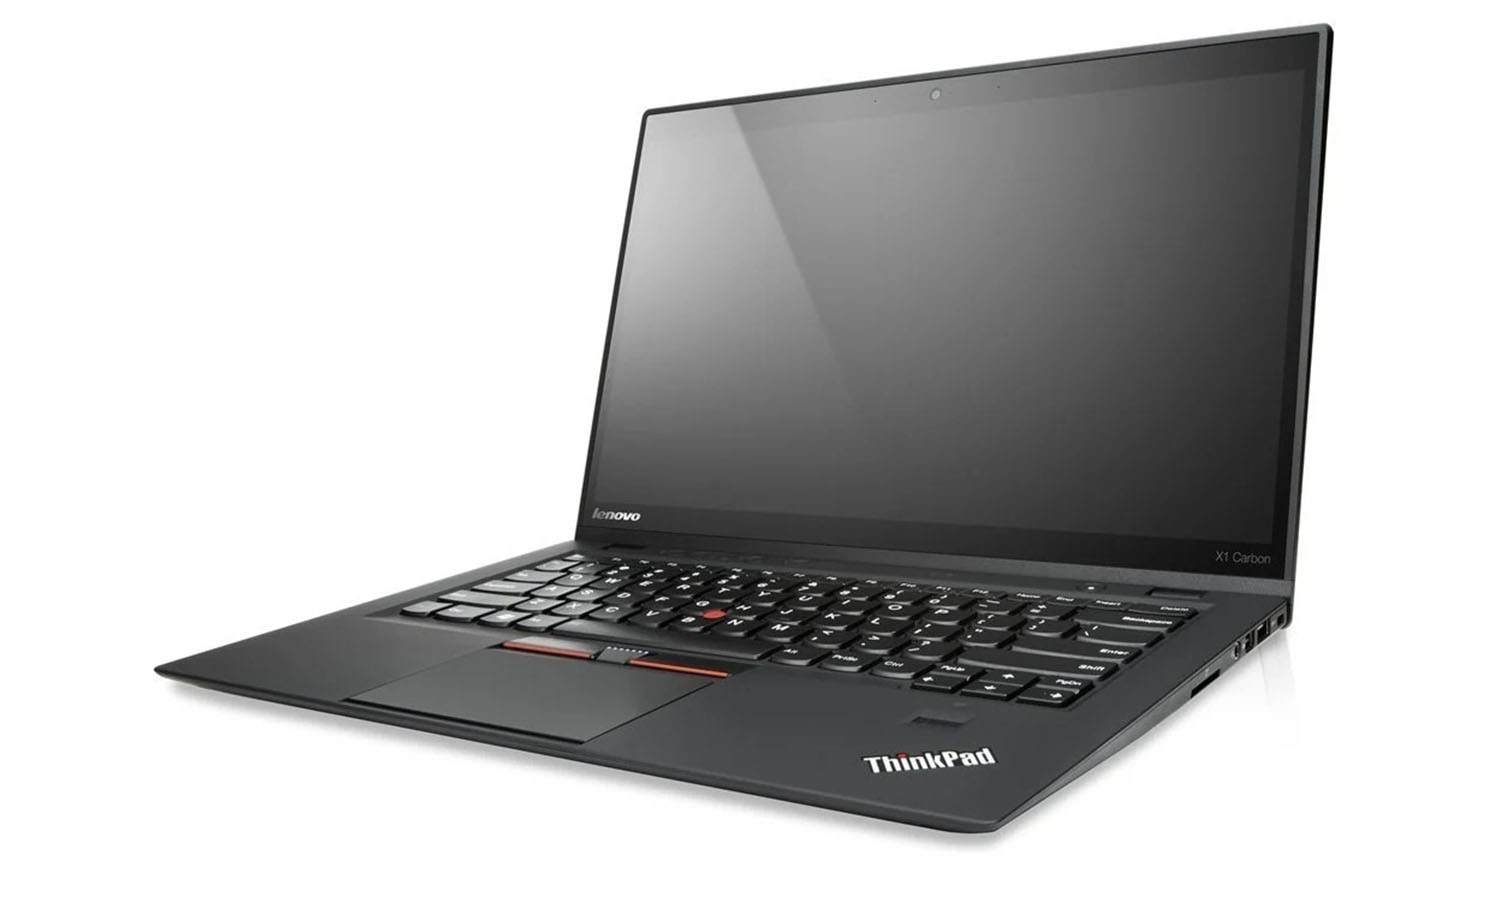 Lenovo ThinkPad X1 Carbon 4th Gen Intel Core i7 6th Gen 8GB RAM 256GB SSD  Windows 10